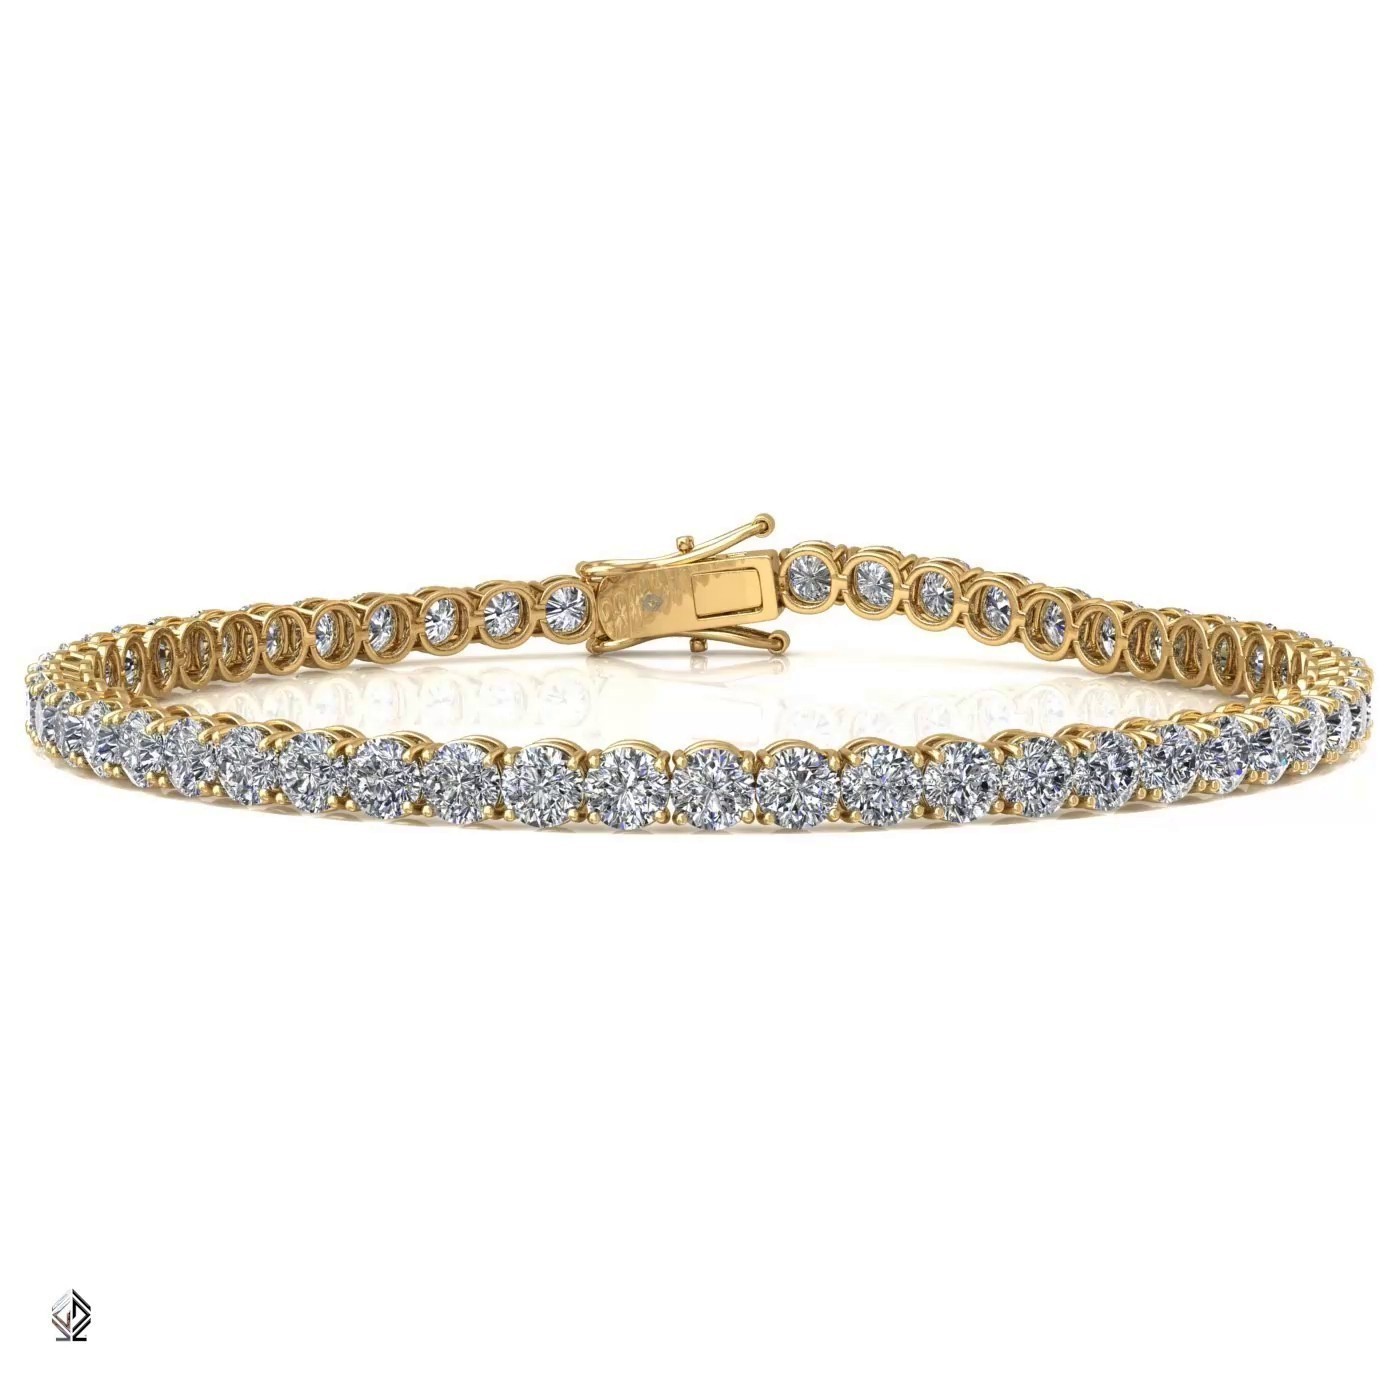 18k white gold 2.6mm 4 prong round shape diamond tennis bracelet in round setting Photos & images